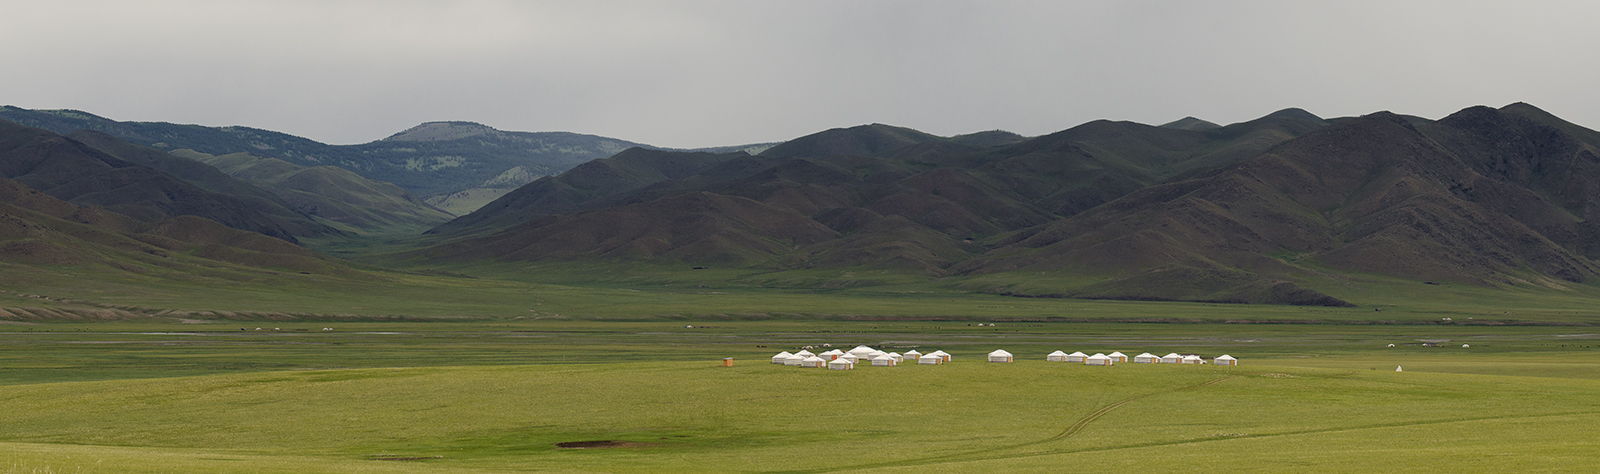 Ger Camp in Mongolia.jpg